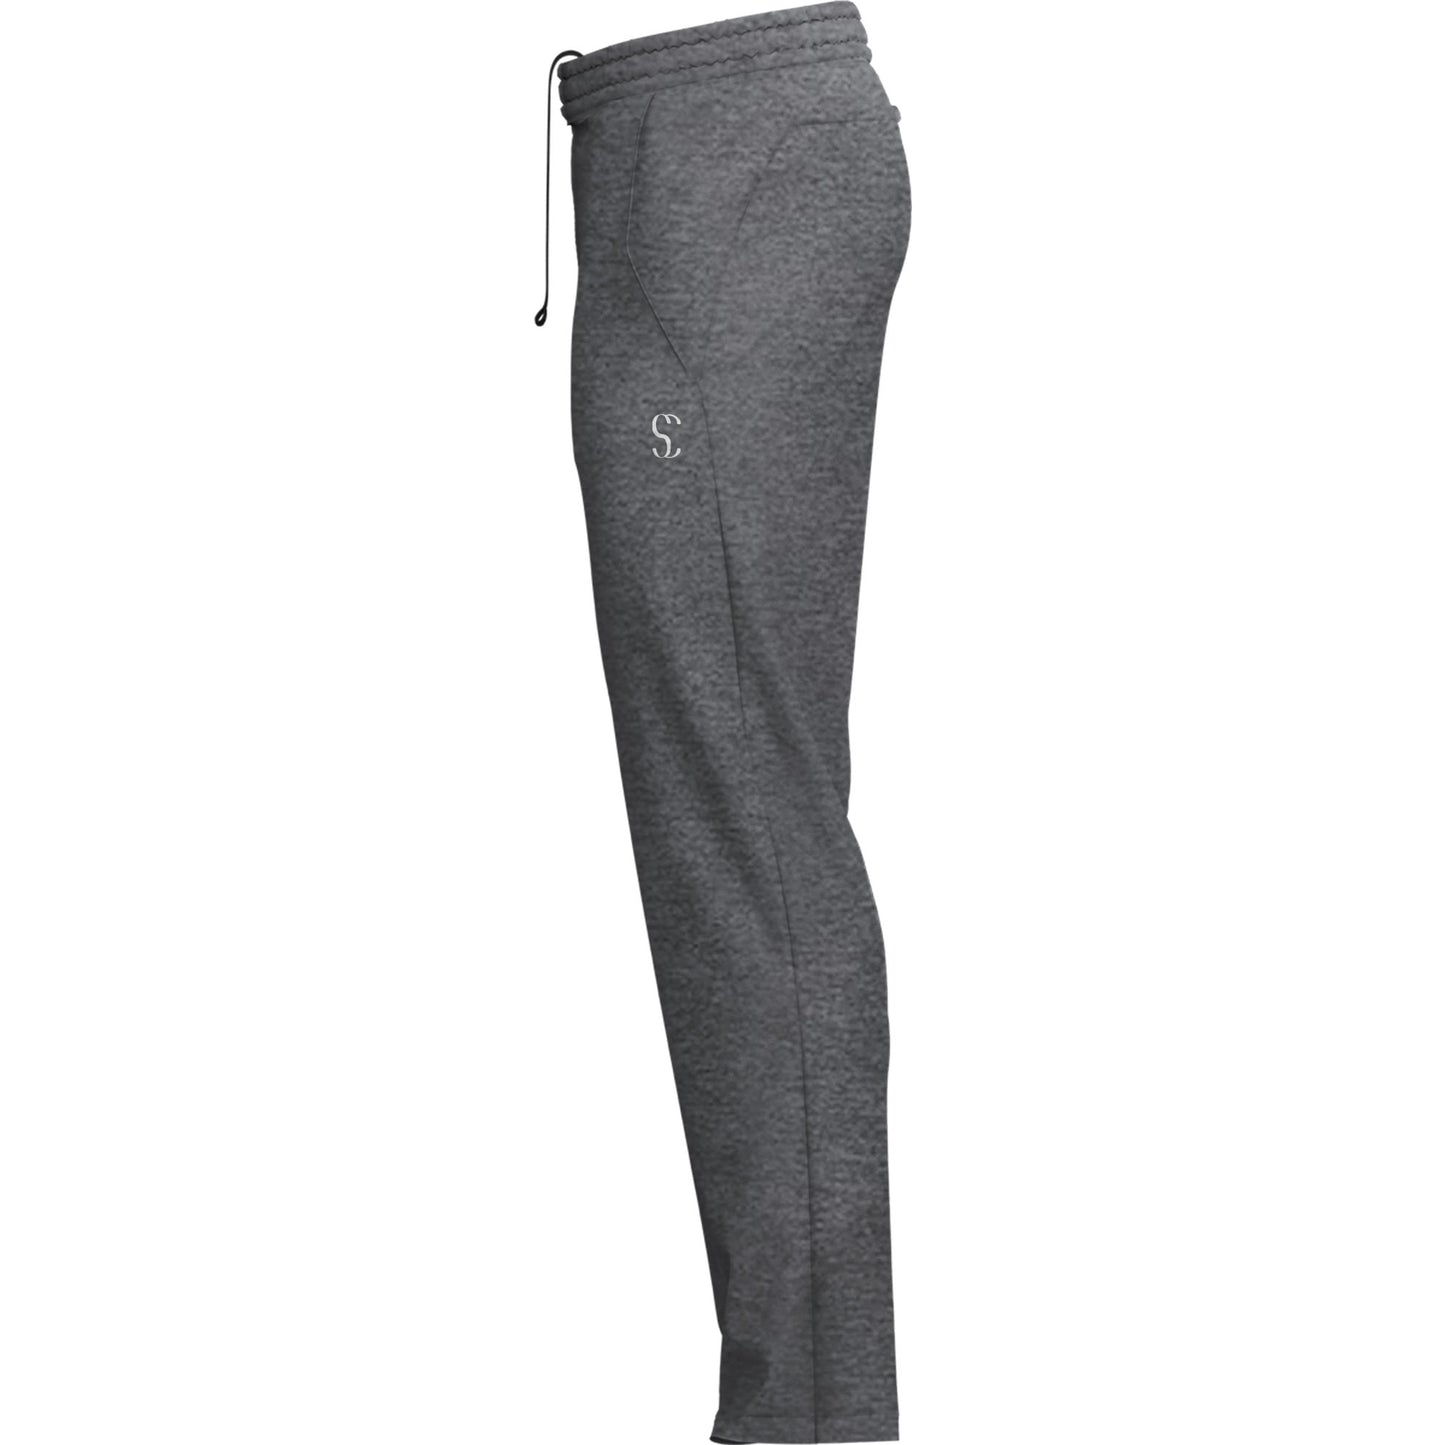 Men's Charcoal Grey Cotton Fleece Thermal Sweatpants